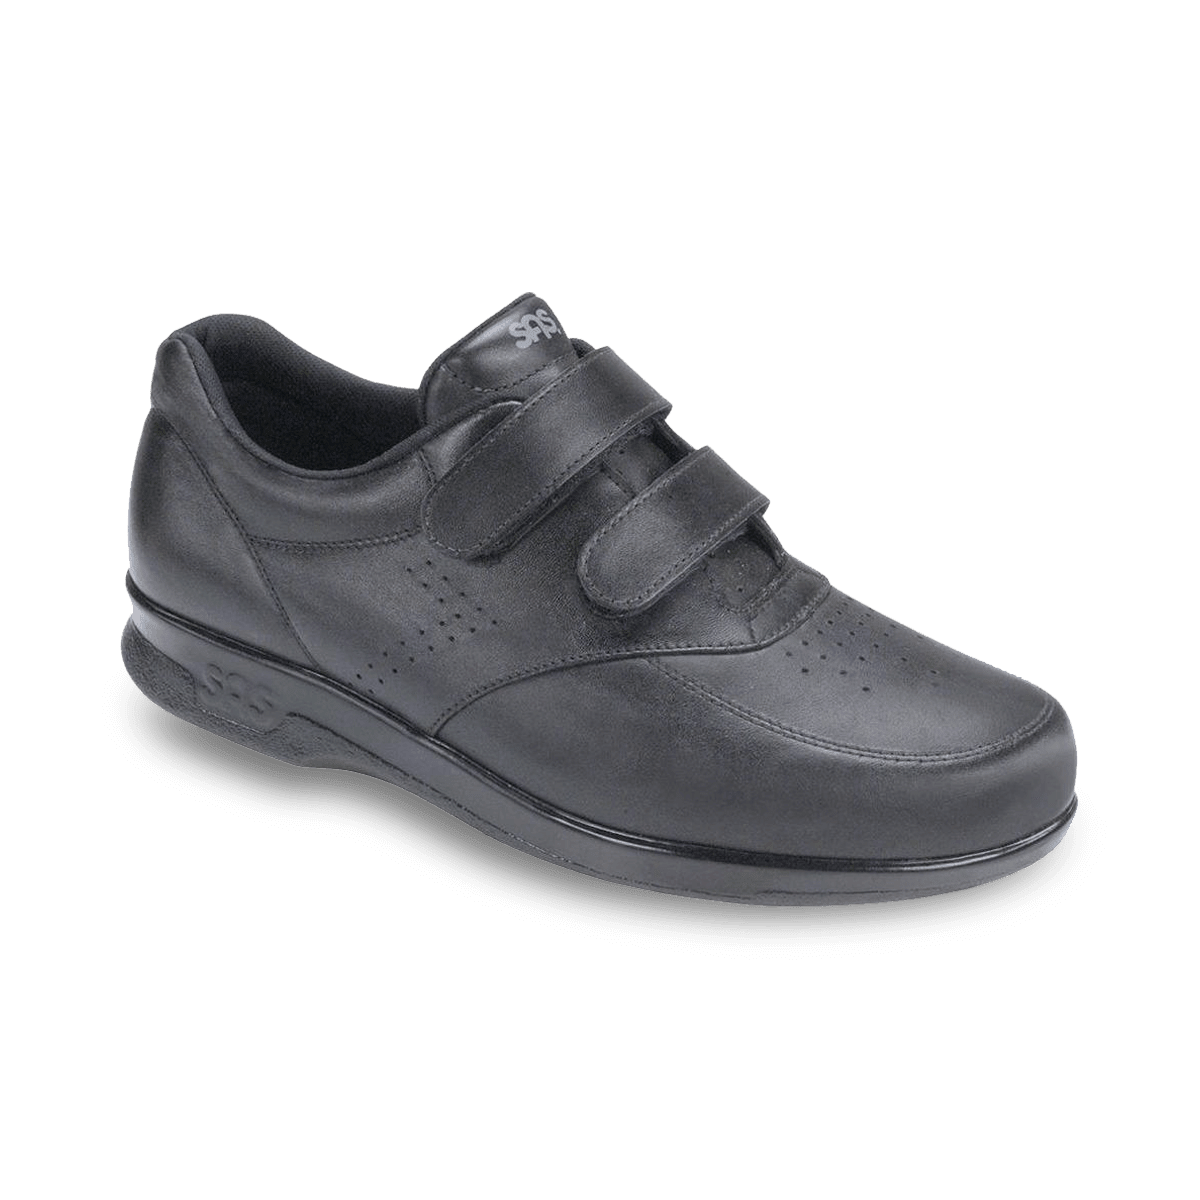 VTO Black - Men's Velcro Walking Shoe - SAS Shoes | SASnola.com